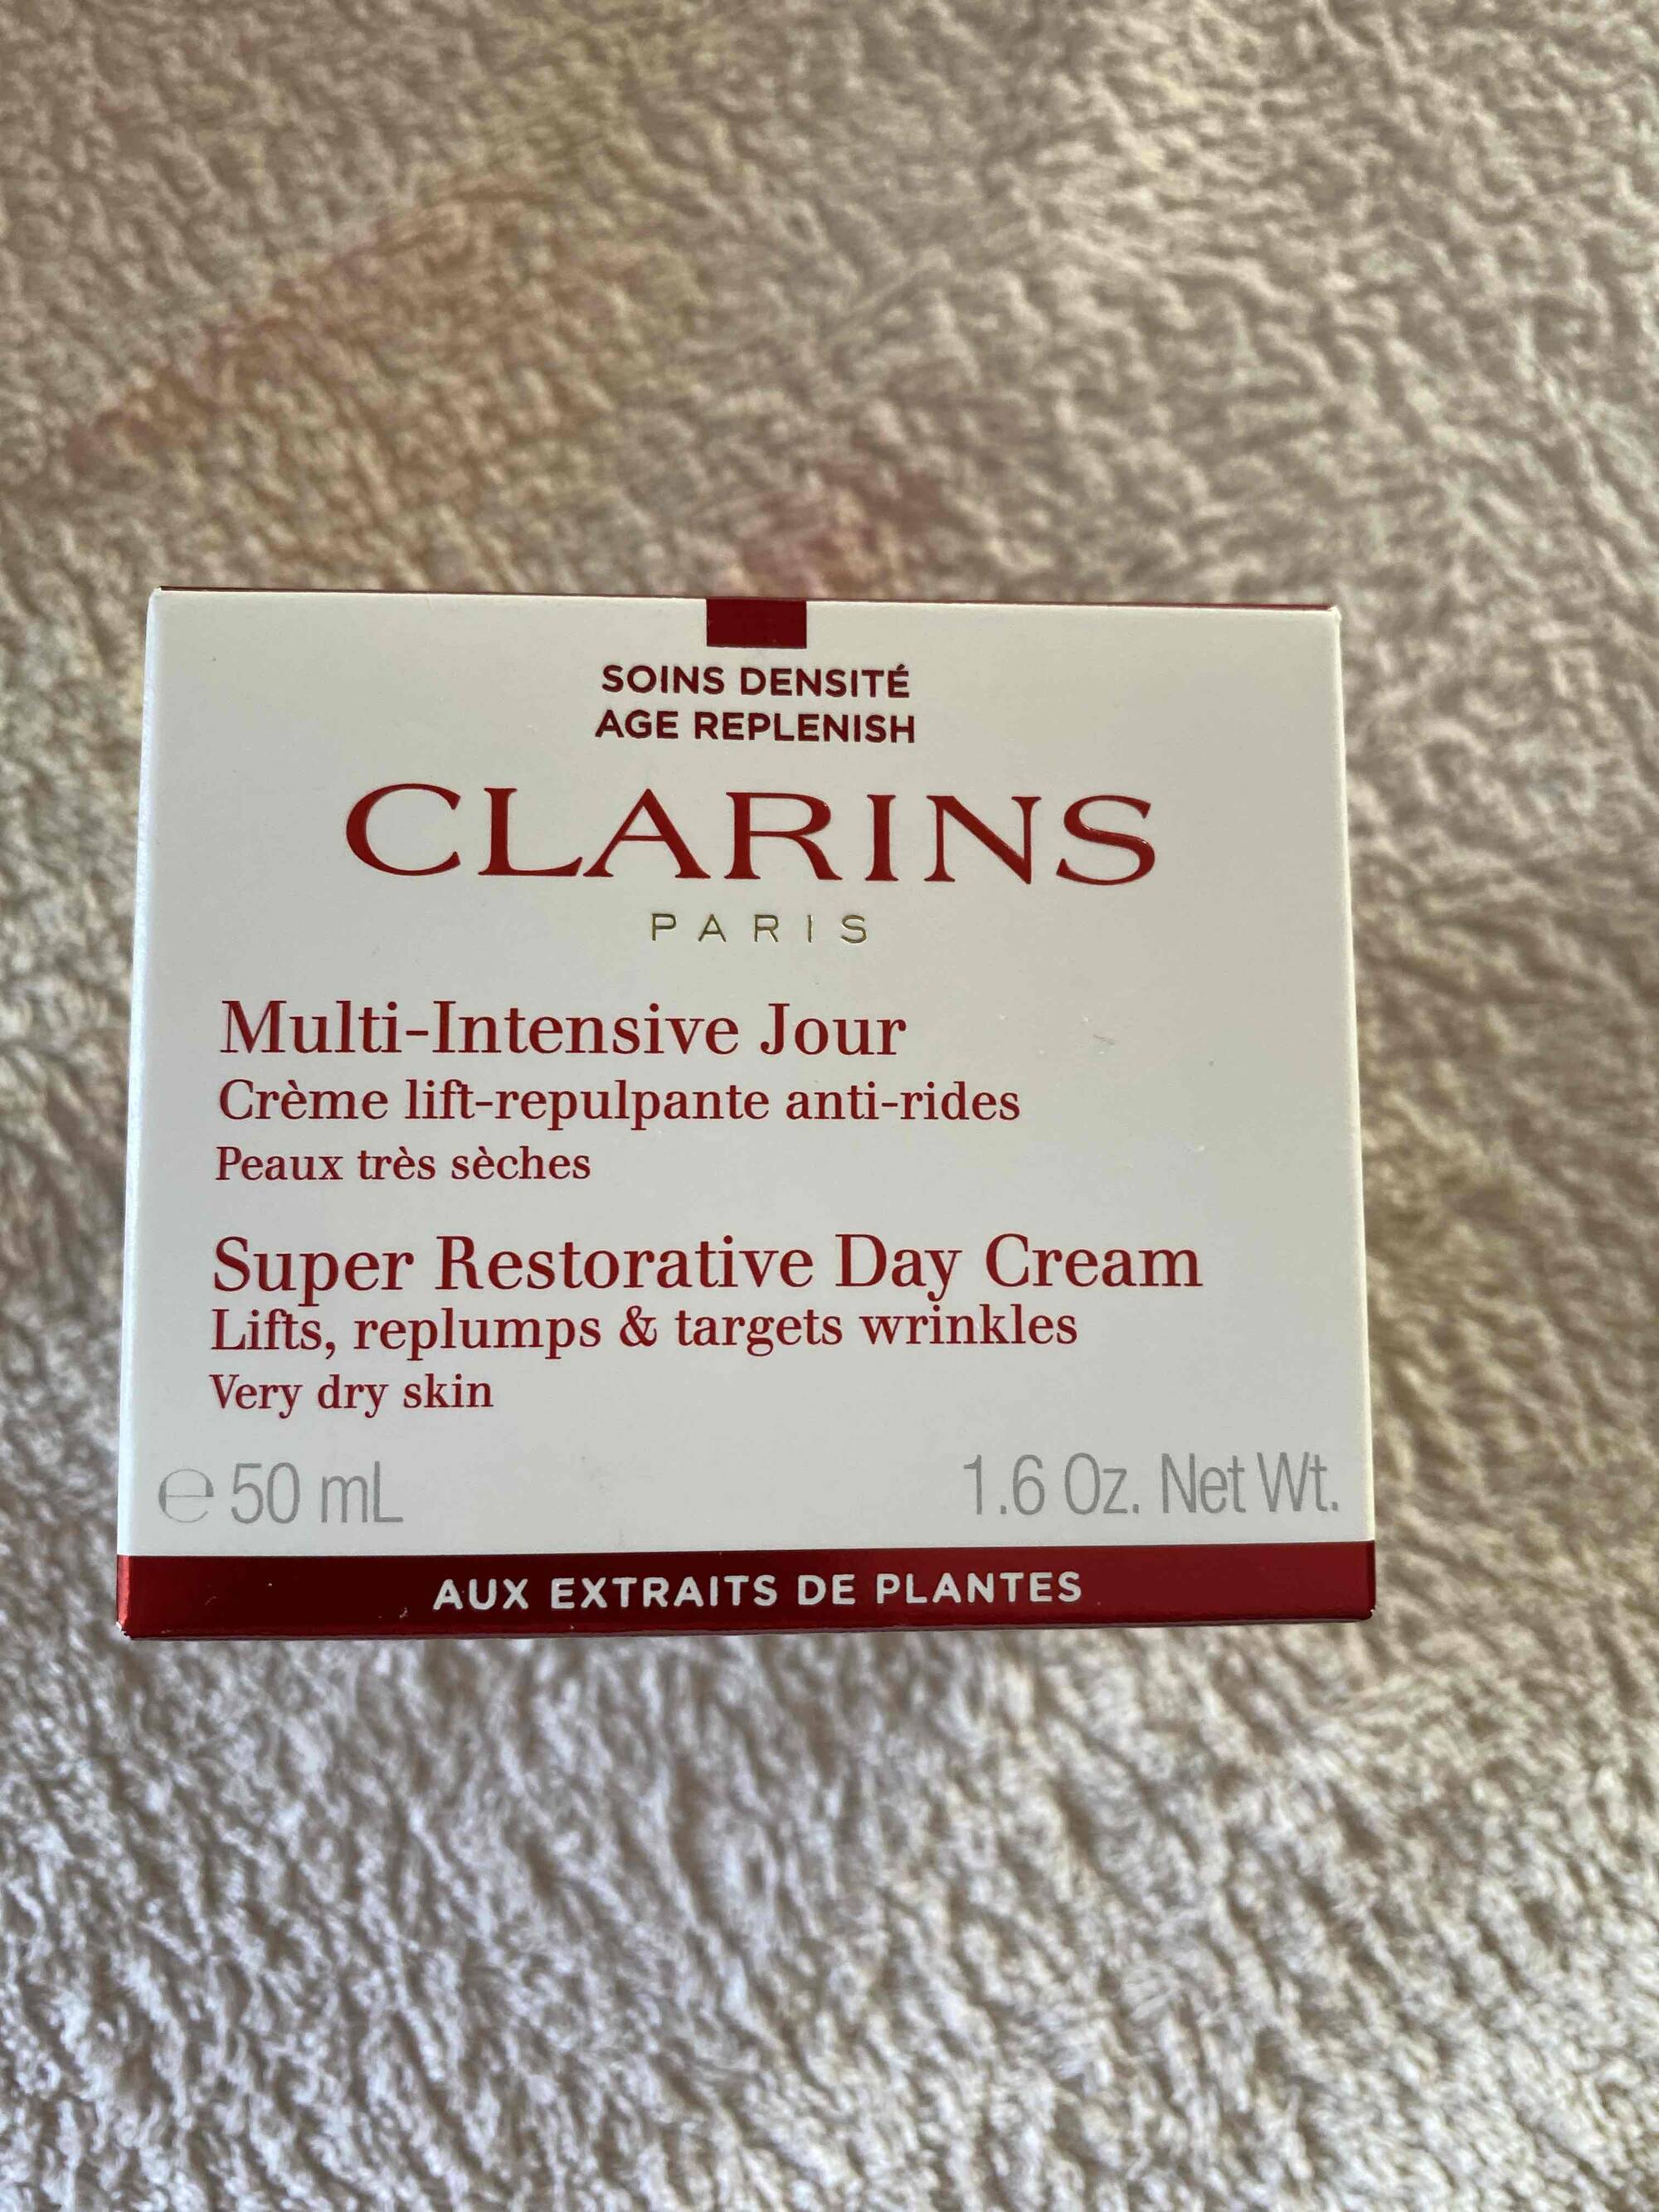 CLARINS - Crème lift-repulpante anti-rides 